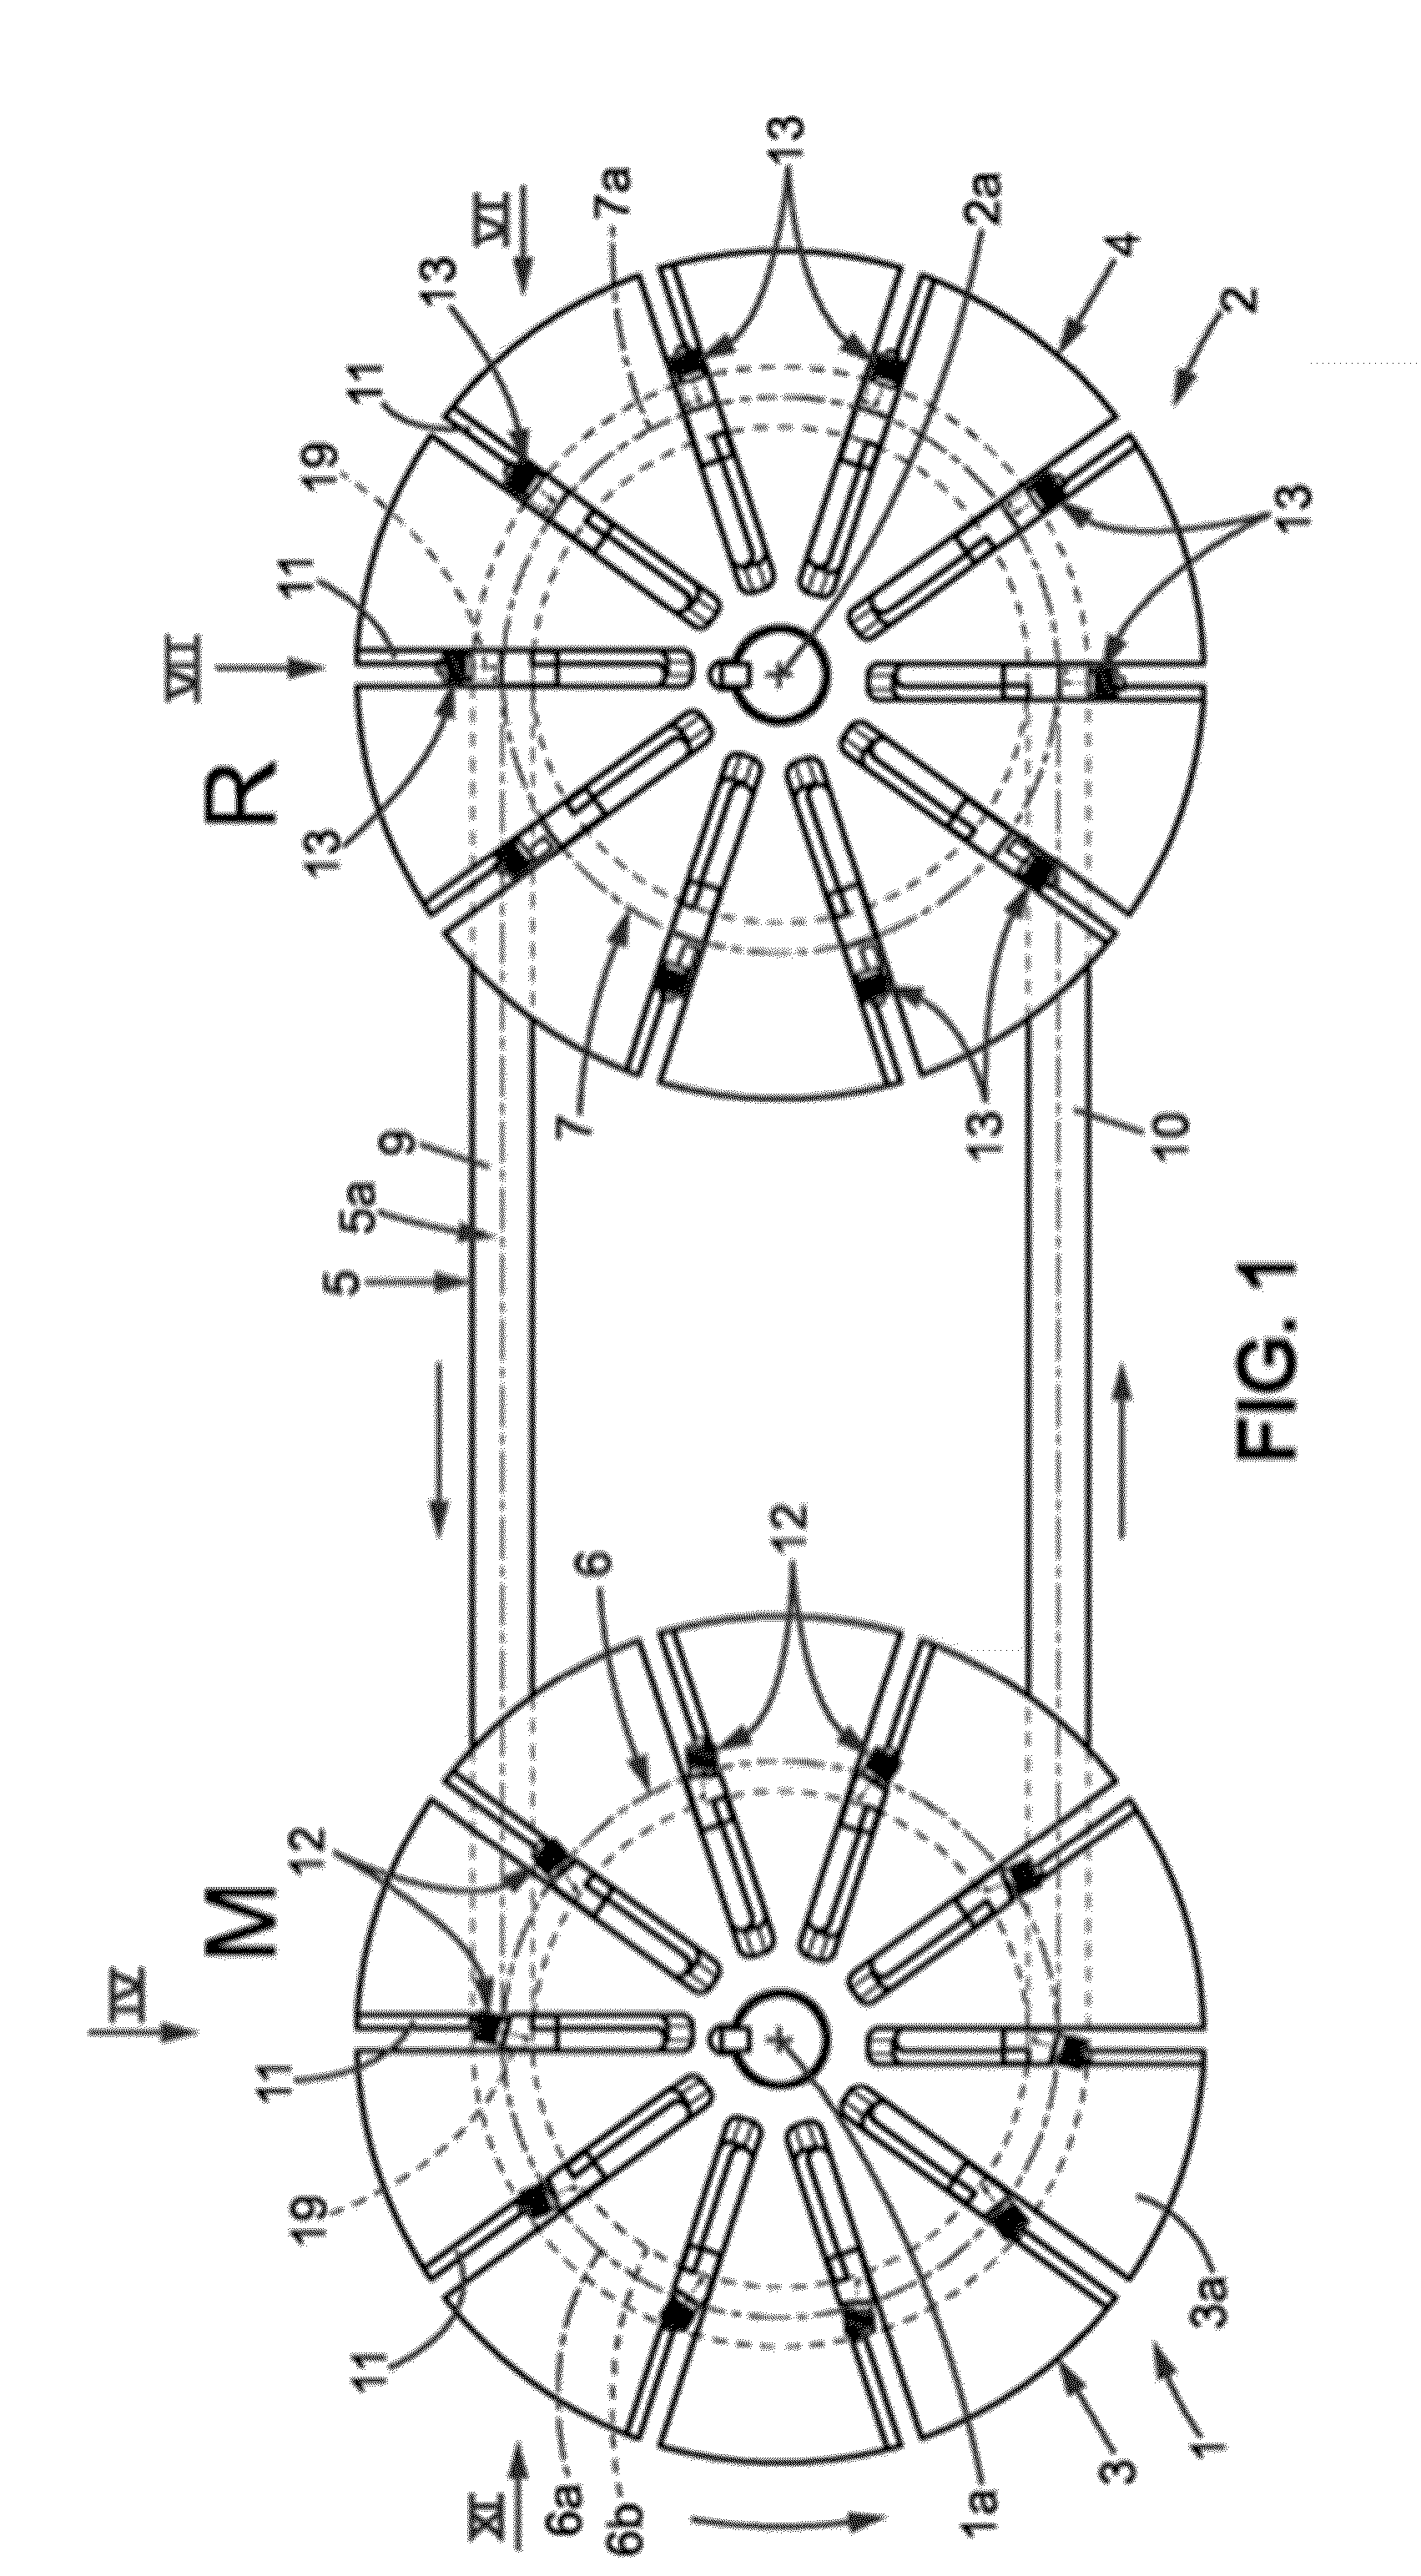 Mechanism for transmitting power of rotation